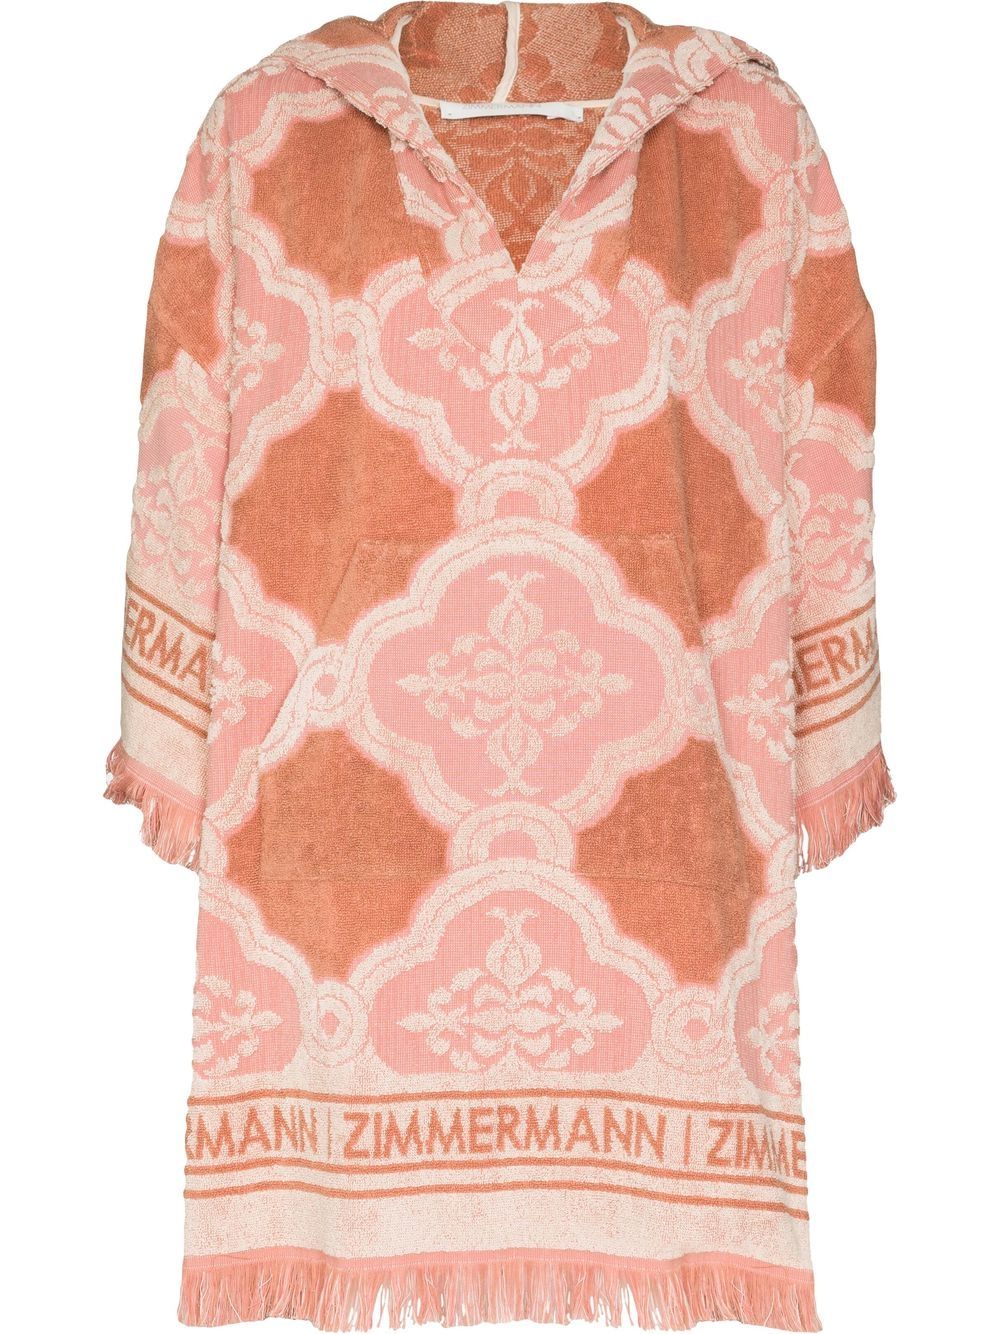 Zimmermann Jeannie Terry Towel Dress Tan/Cream